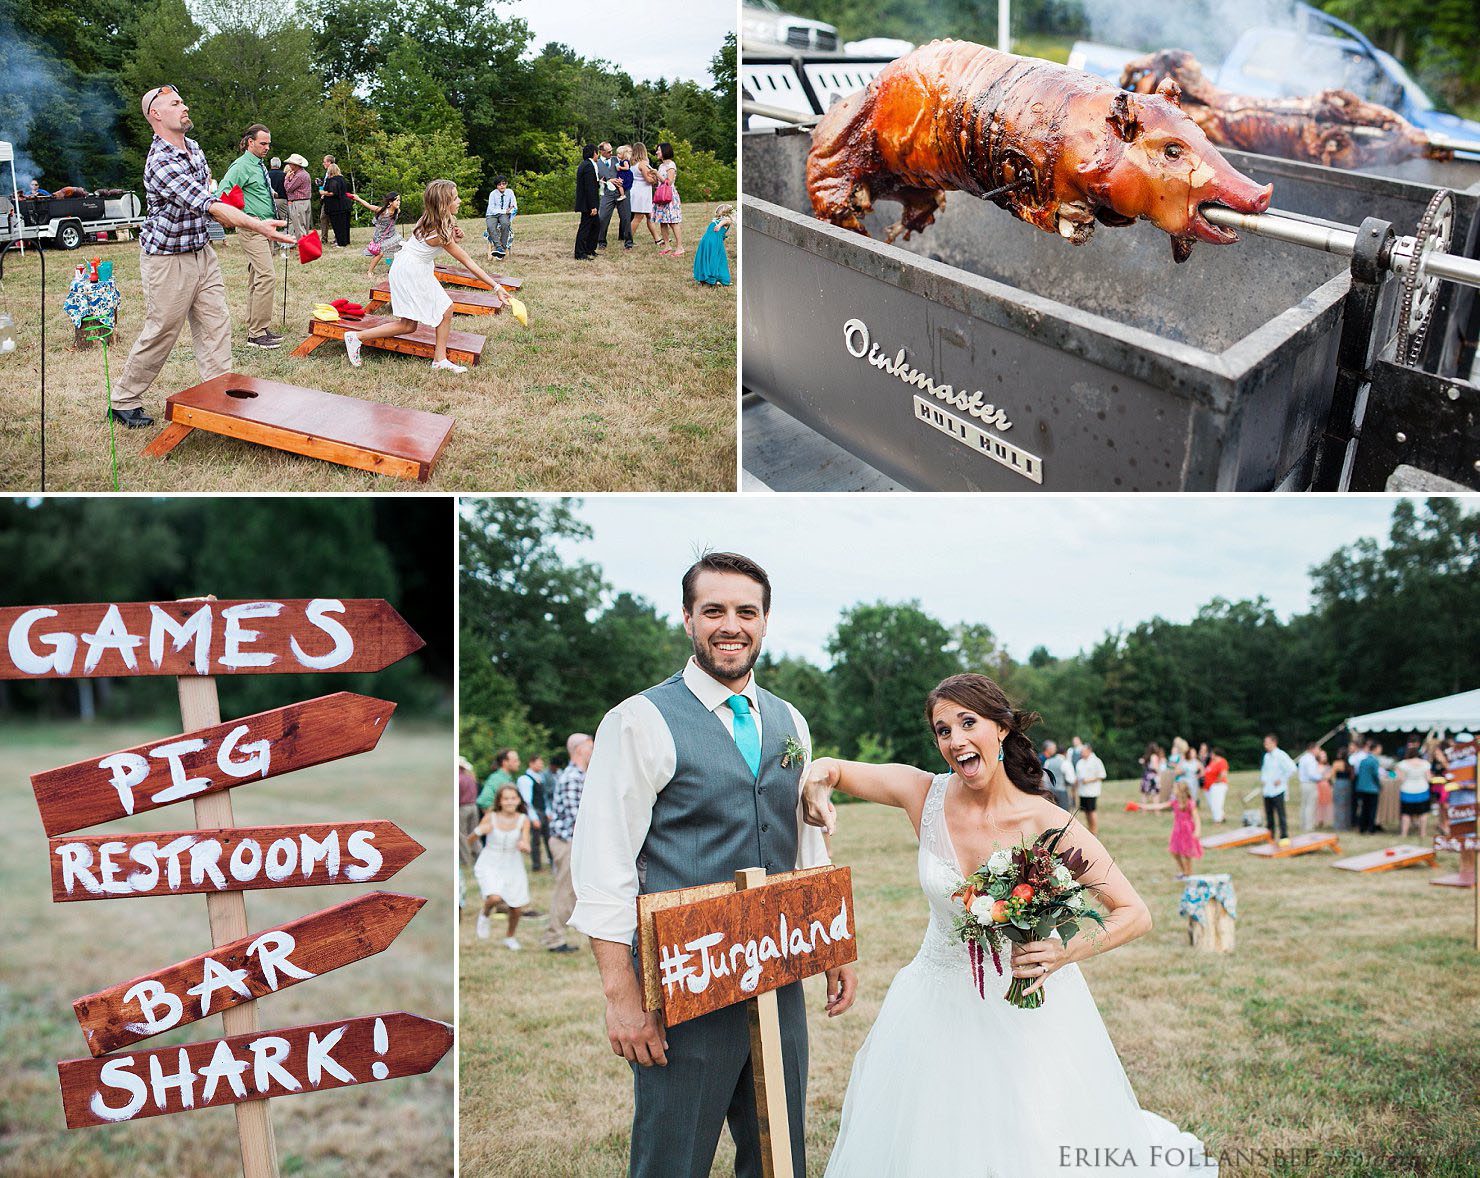 Shark themed wedding reception with pig roast | Shirley, MA